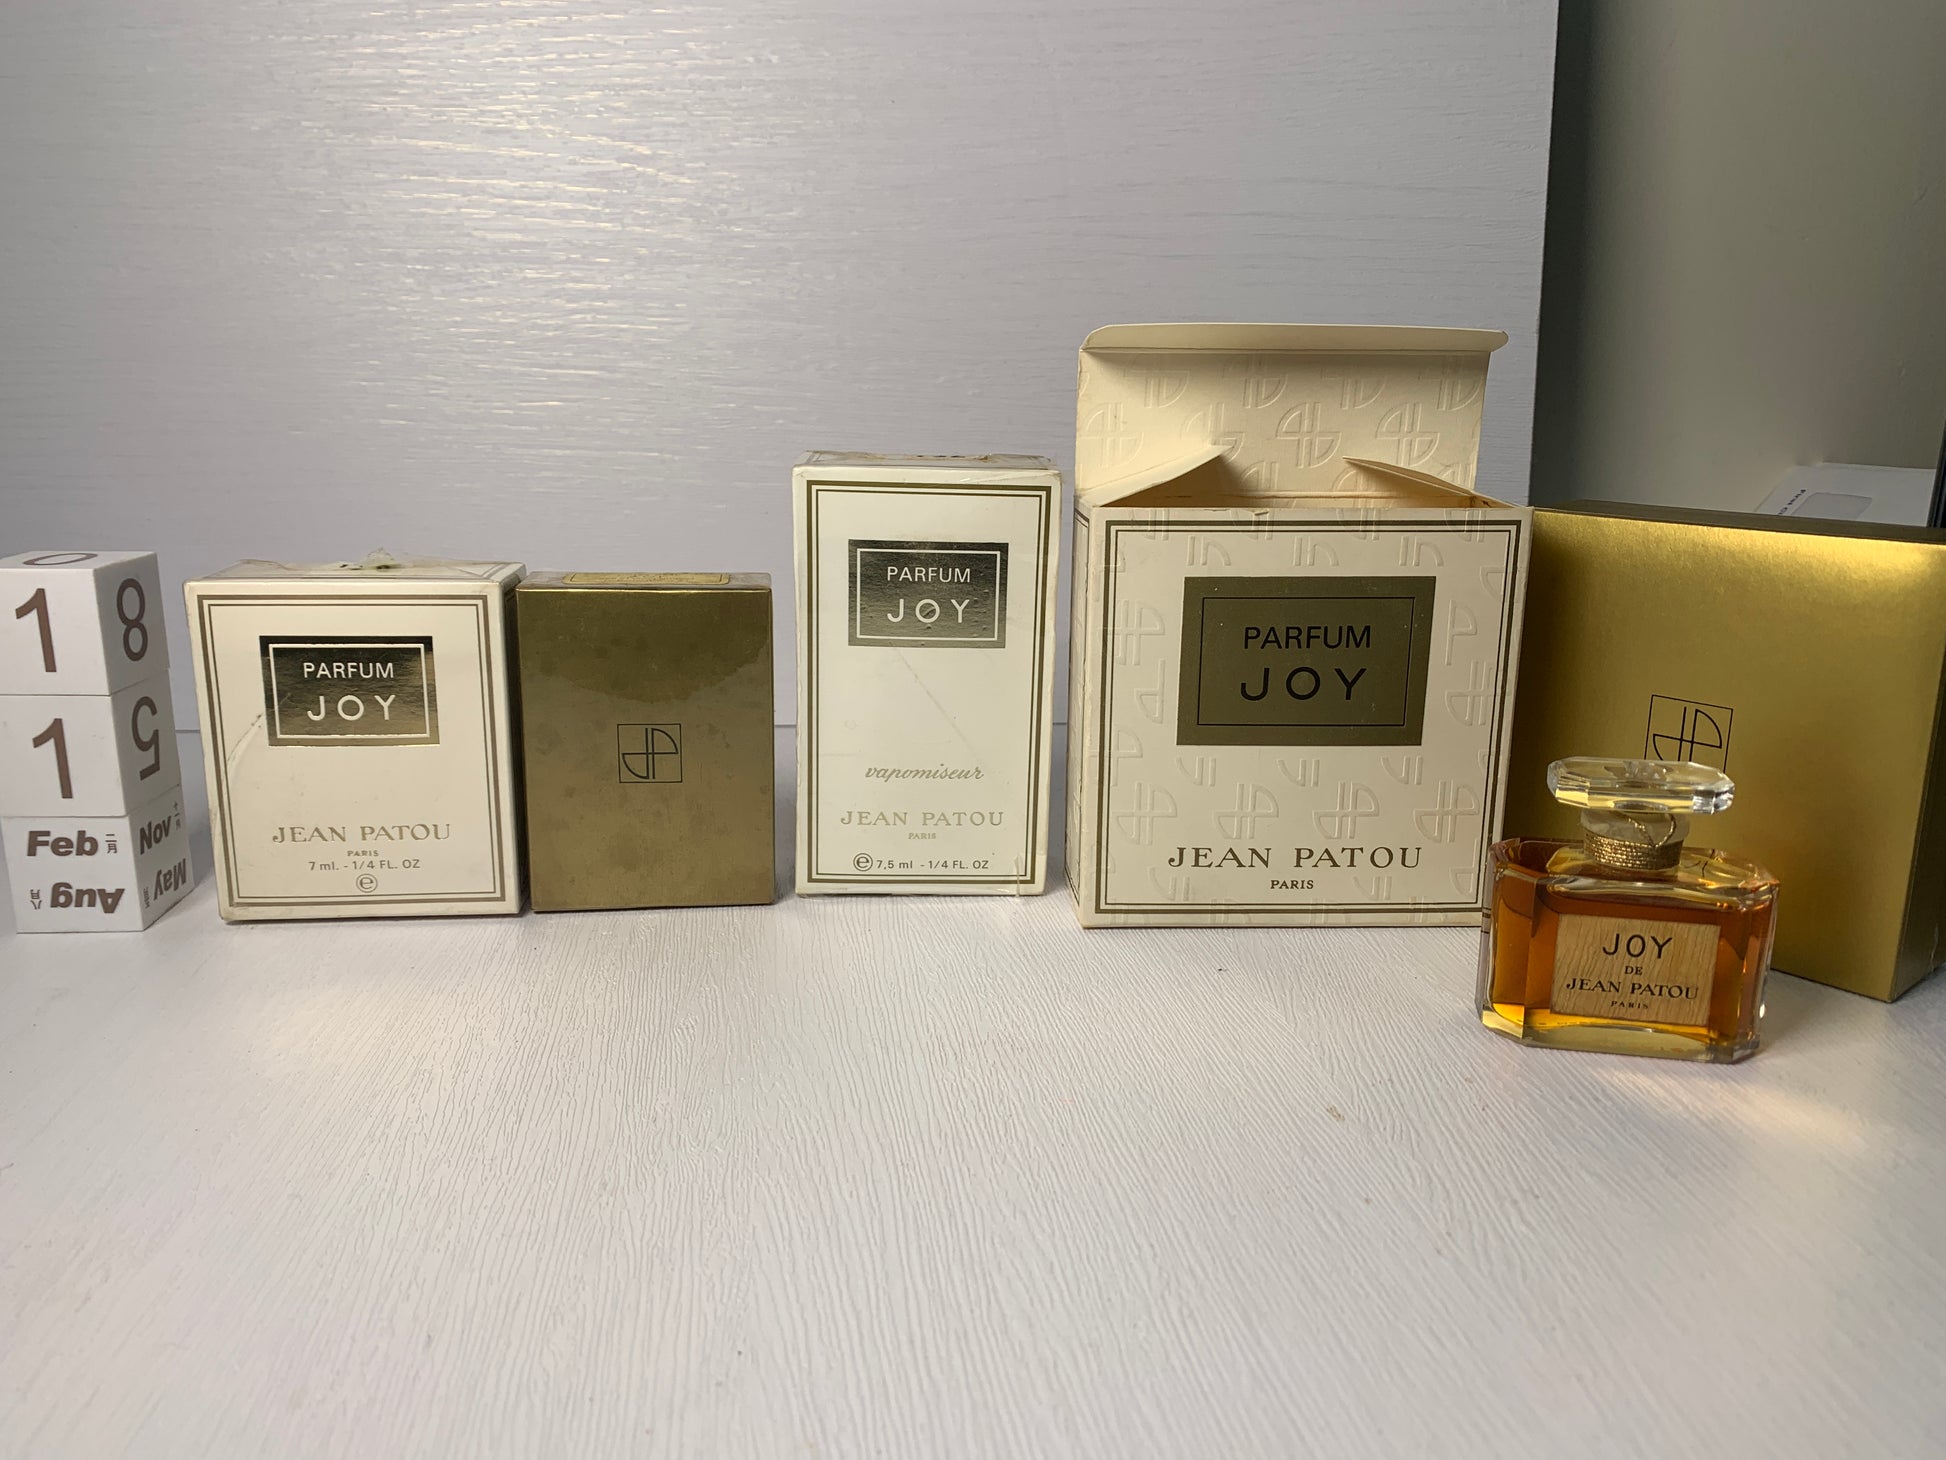 Rare Chanel coco parfum 7ml 15ml 30ml Perfume - 12FEB22 – Trendy Ground